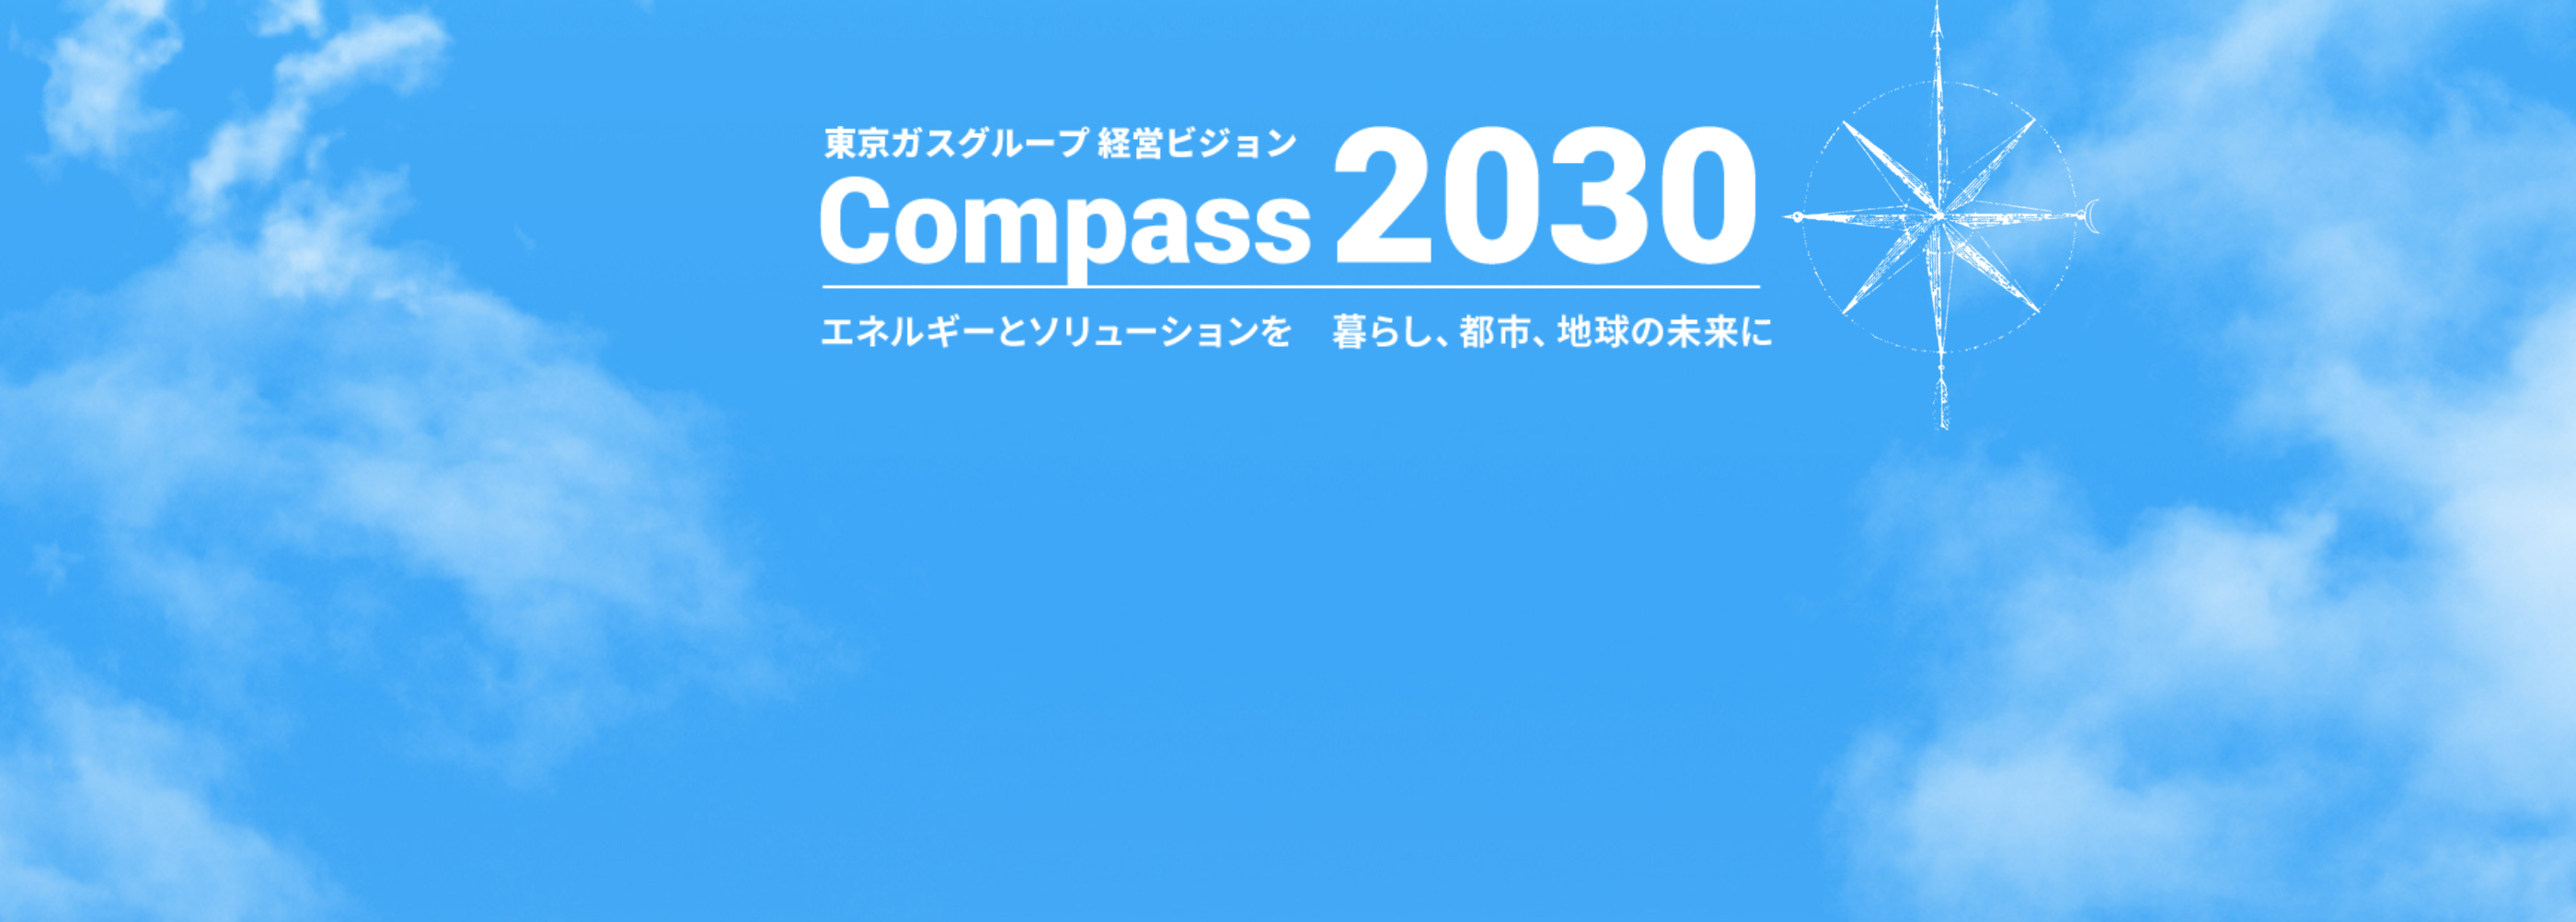 Compass 2030